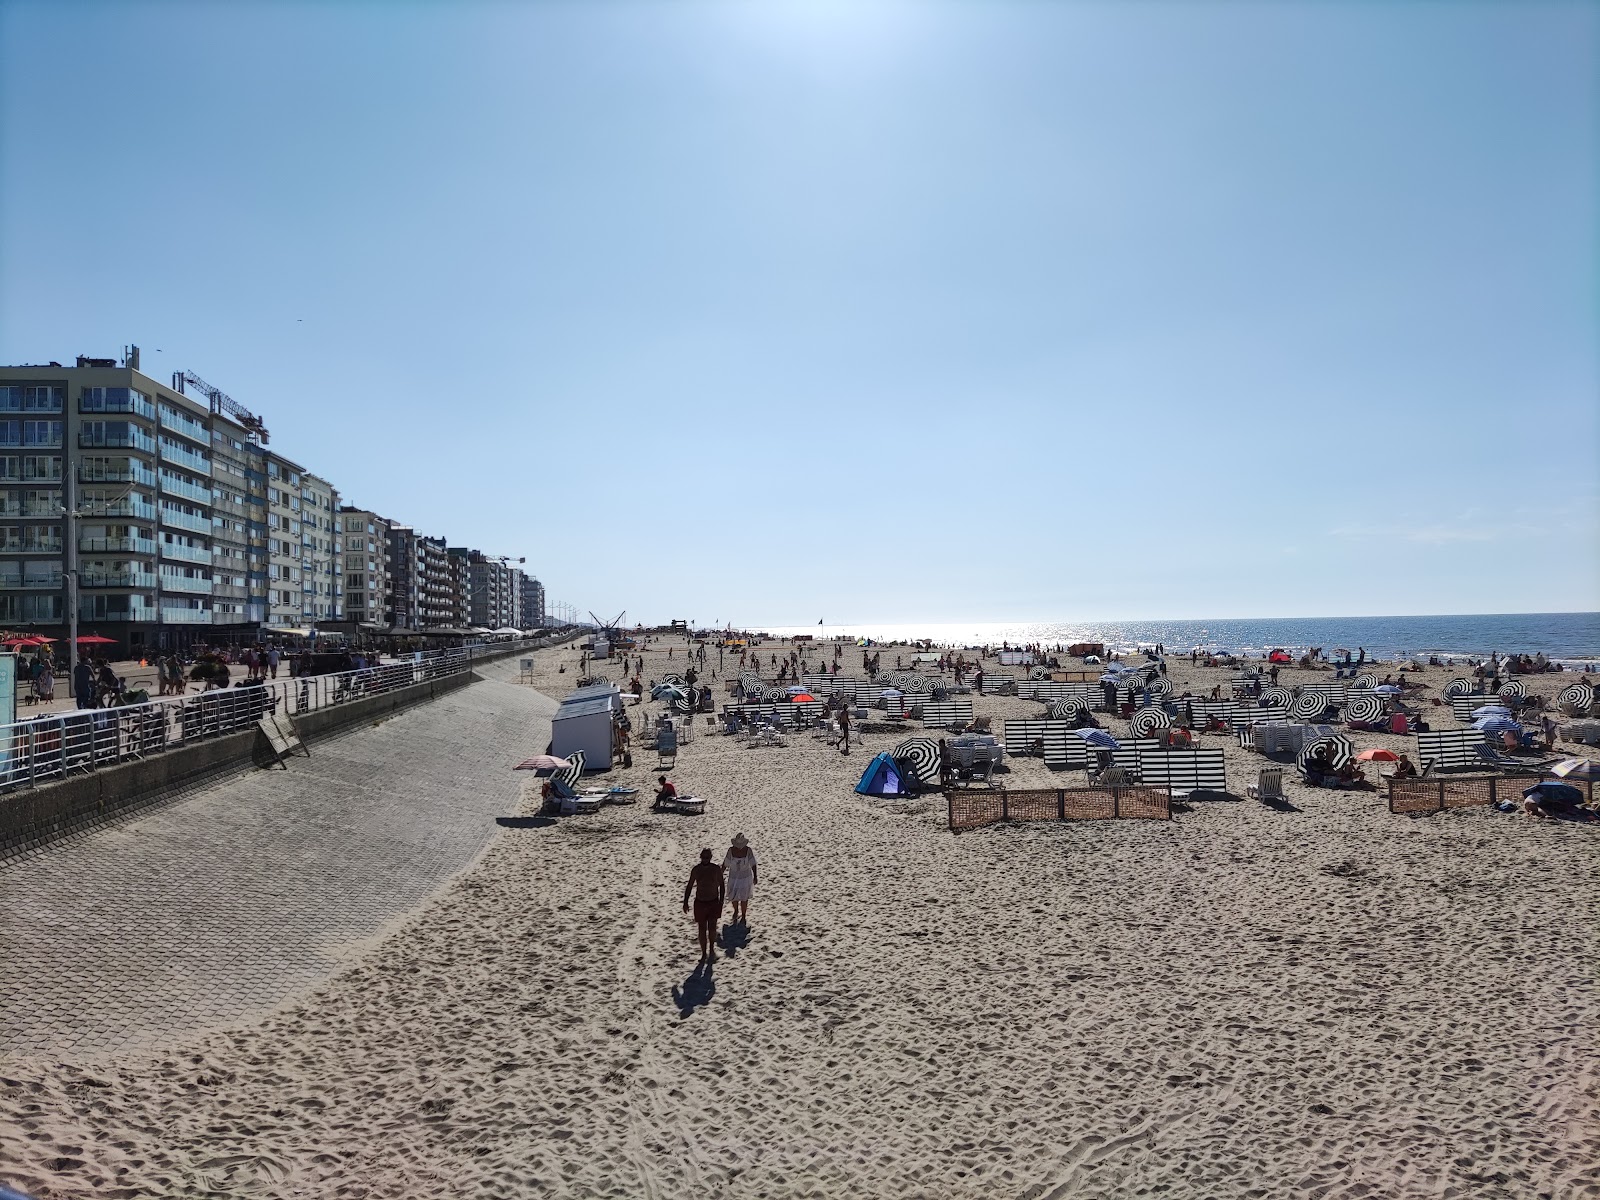 De Panne Strand的照片 带有明亮的沙子表面